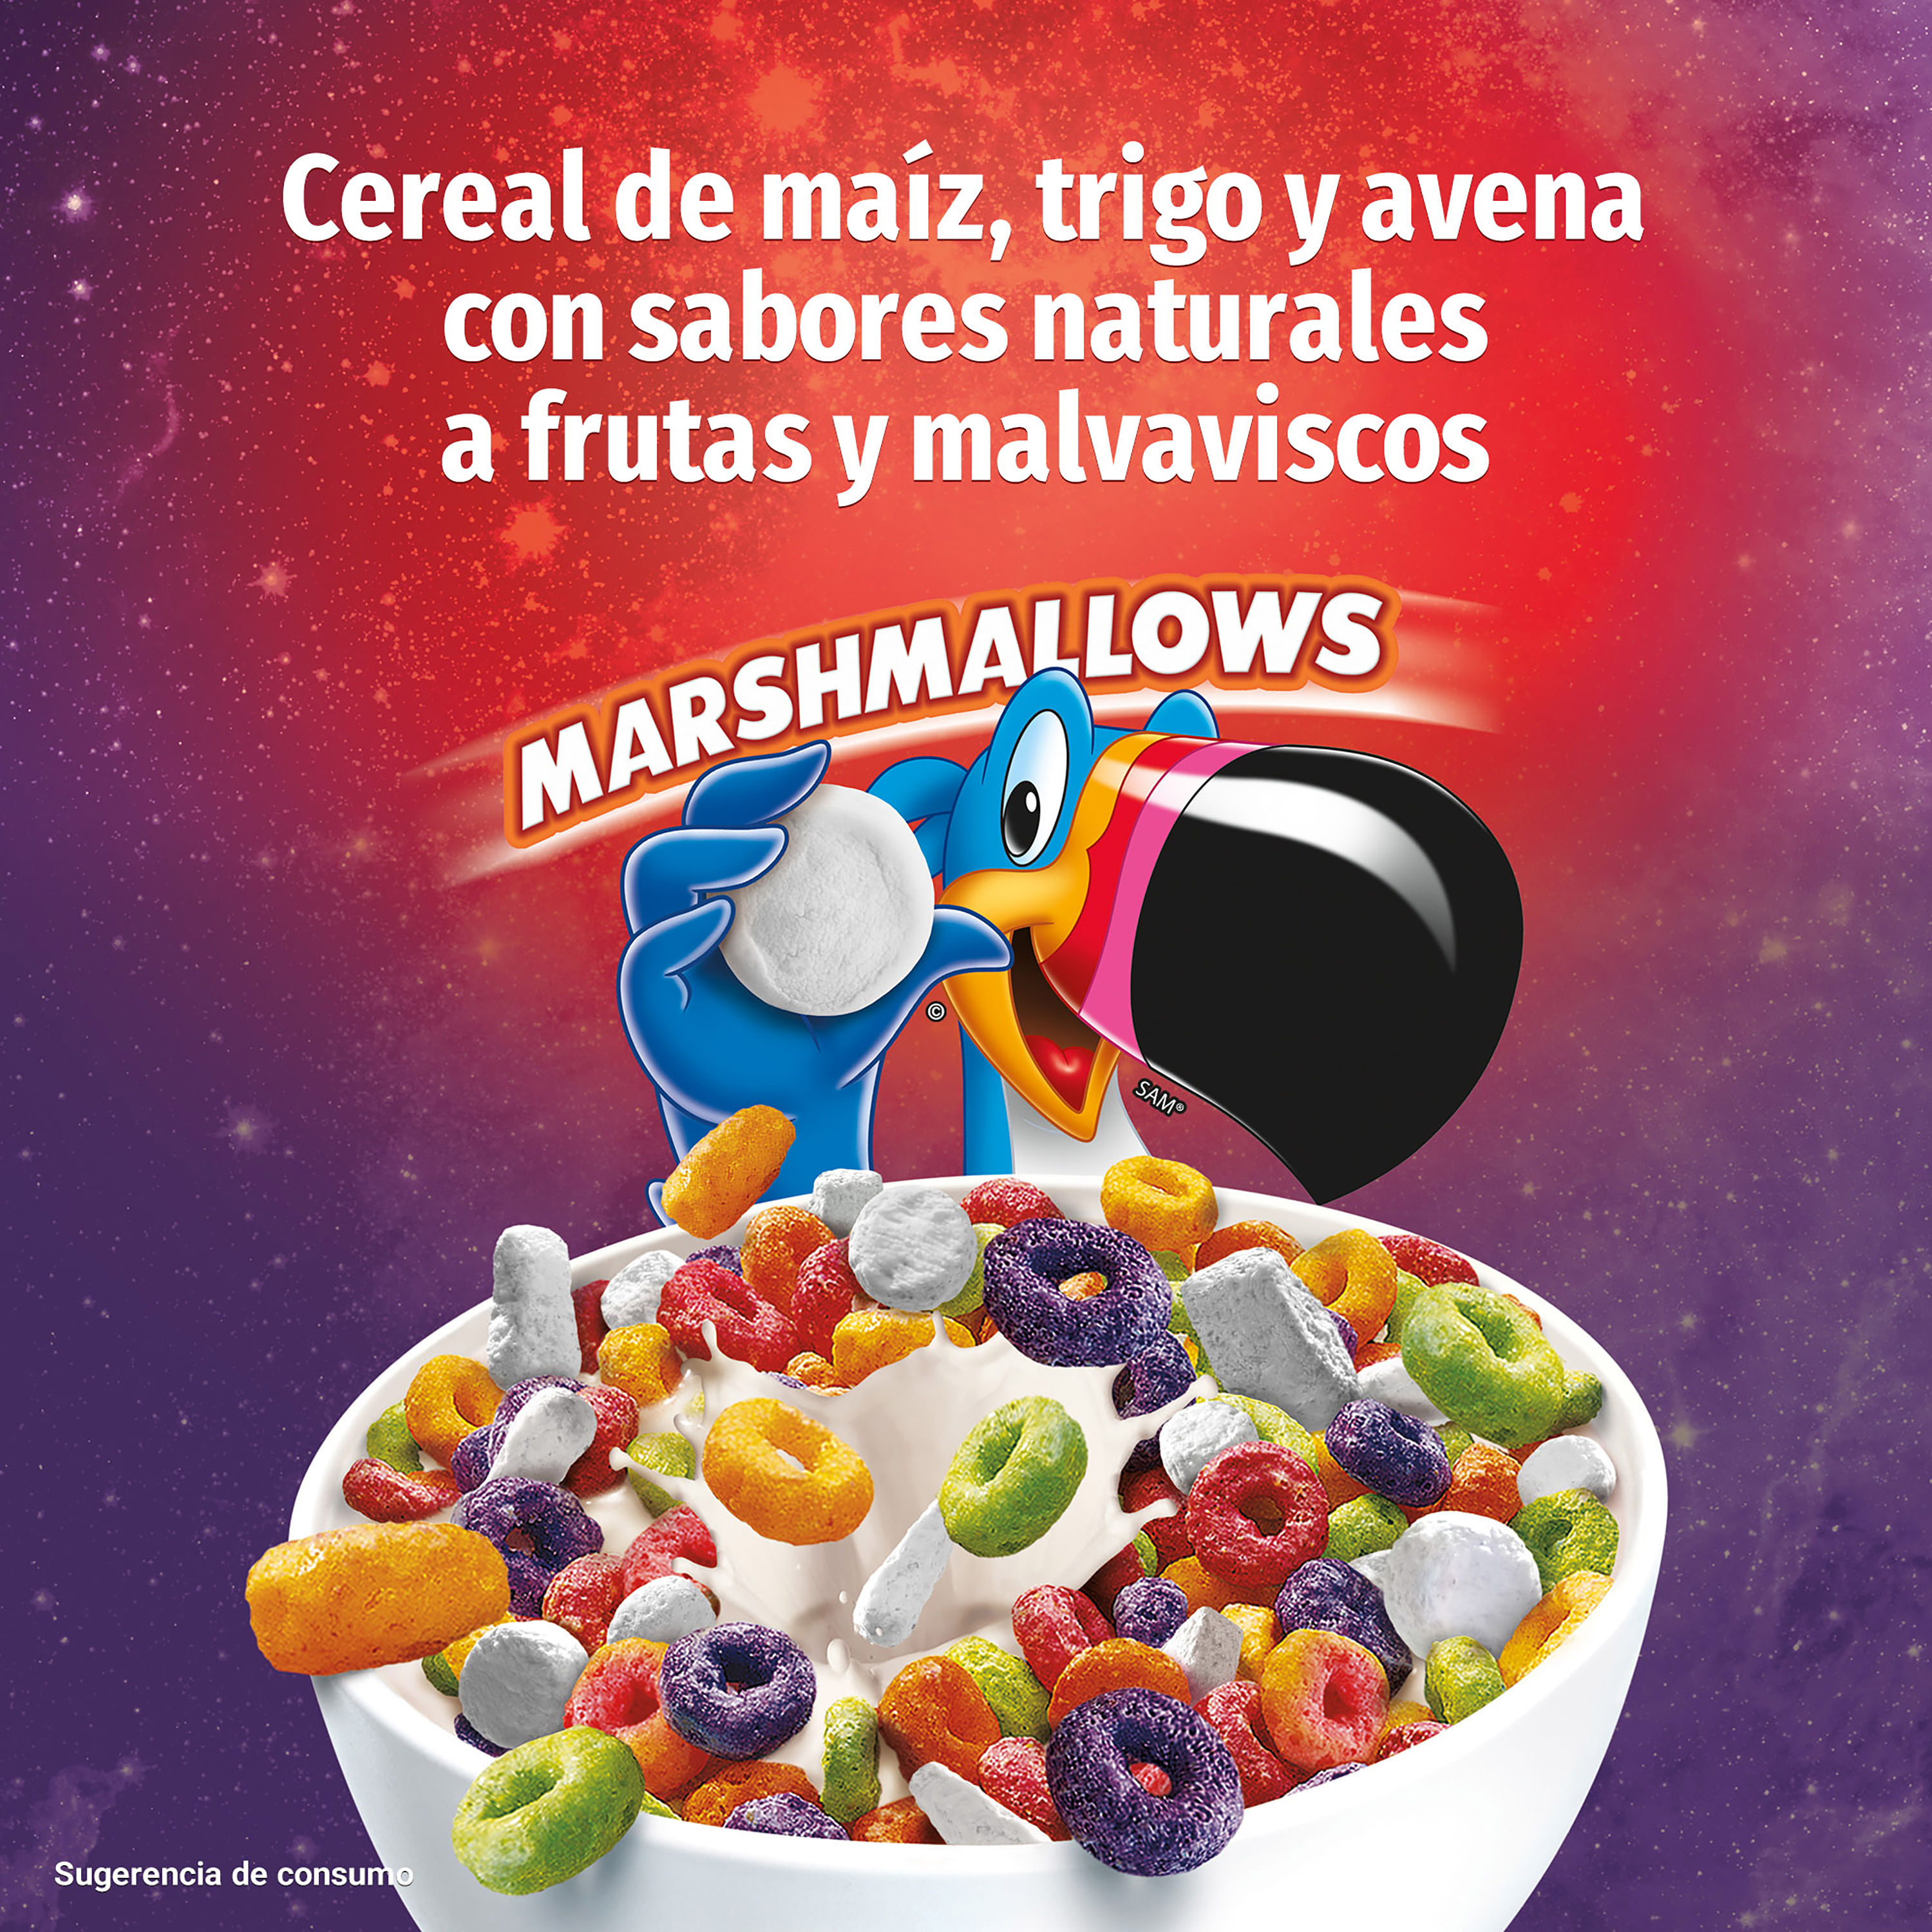 Comprar Cereal Kellogg's® Froot Loops® Sabor Origrinal - Aritos de